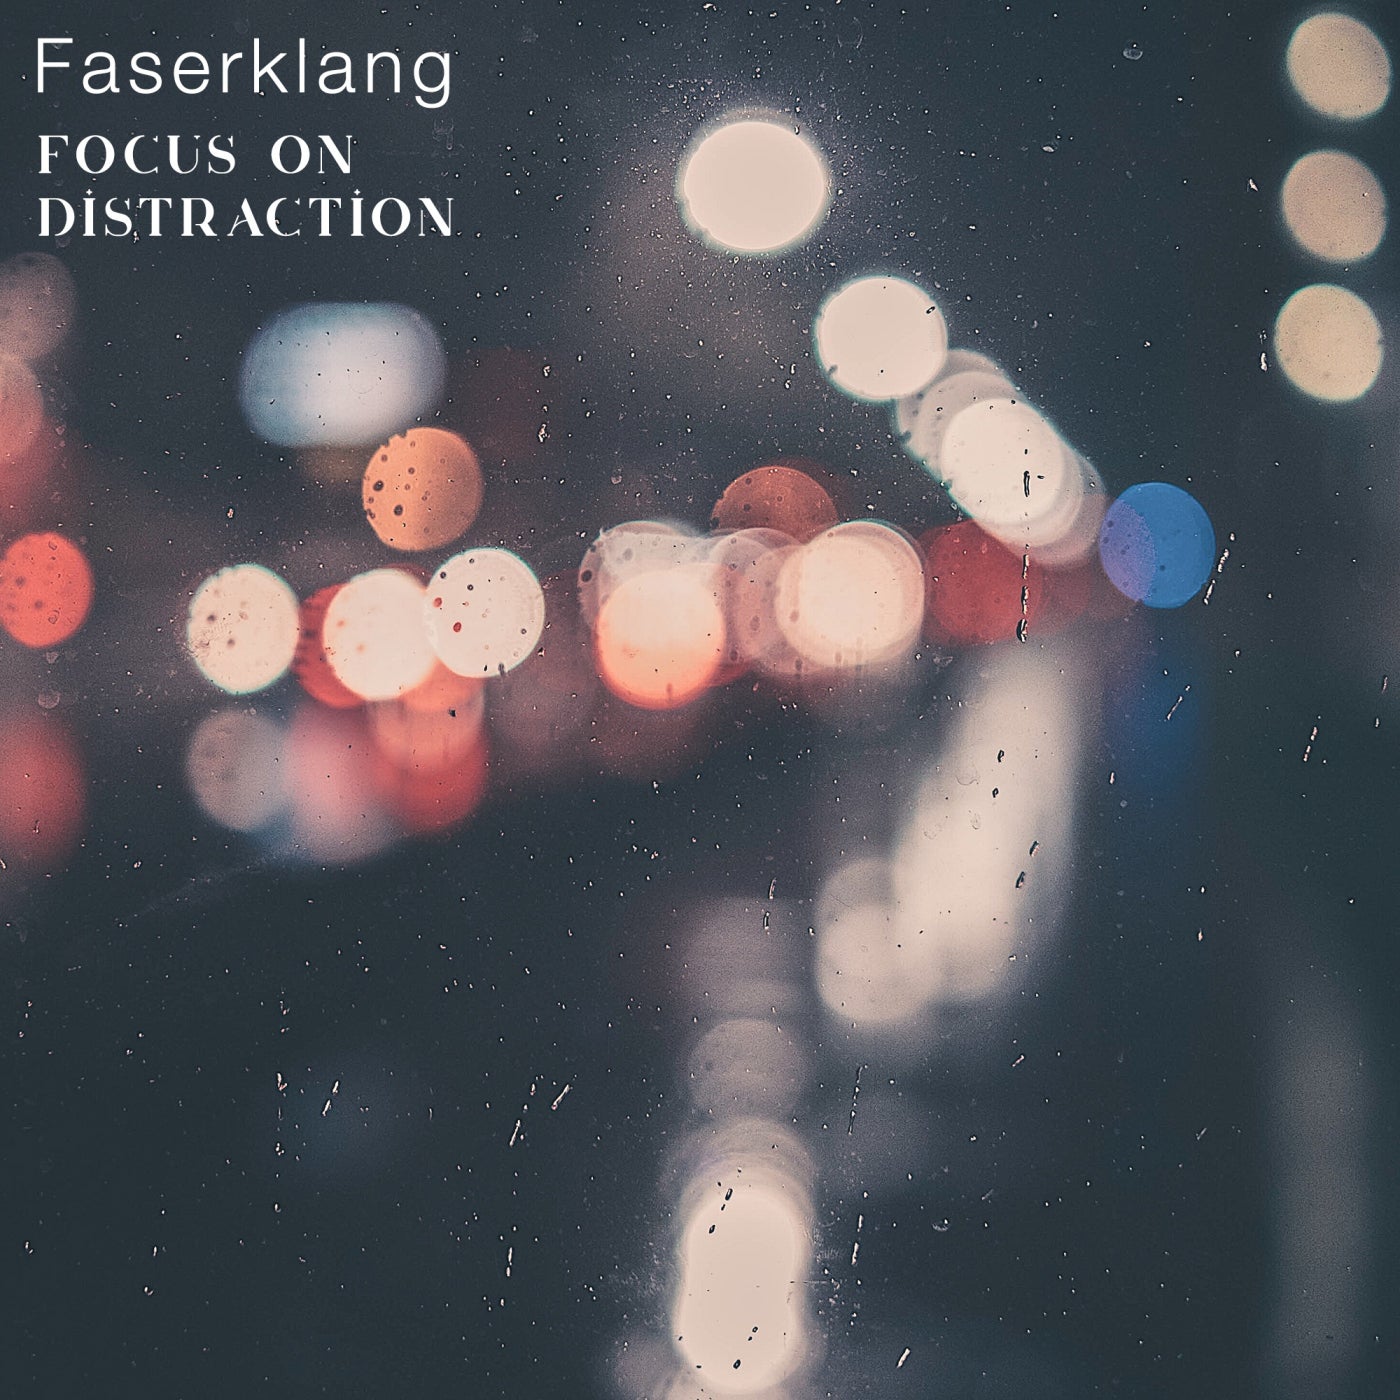 Faserklang – Focus on distraction